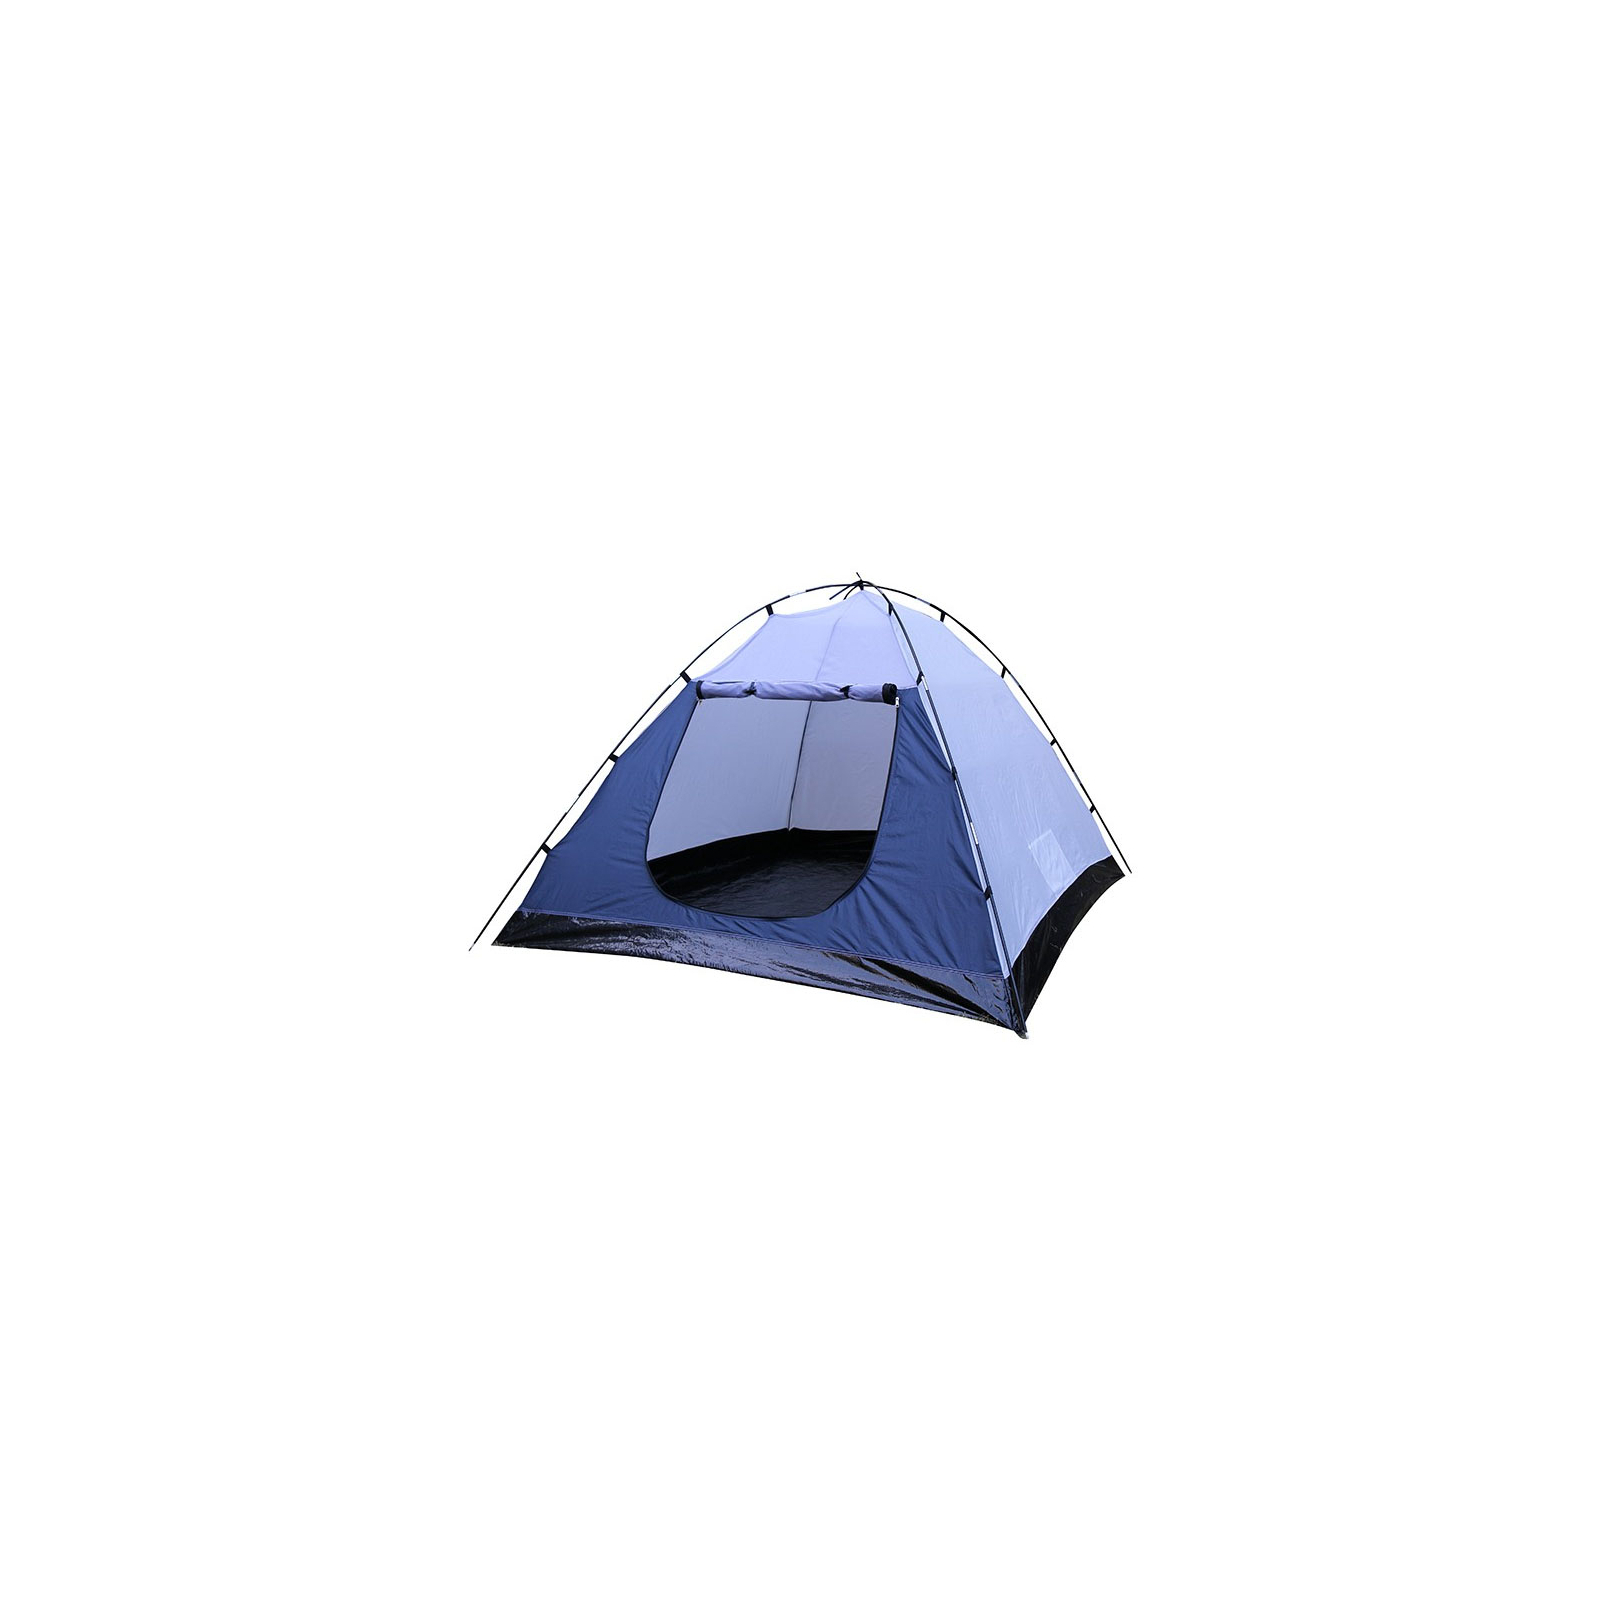 Палатка Solex APIA 2 (82190) изображение 2